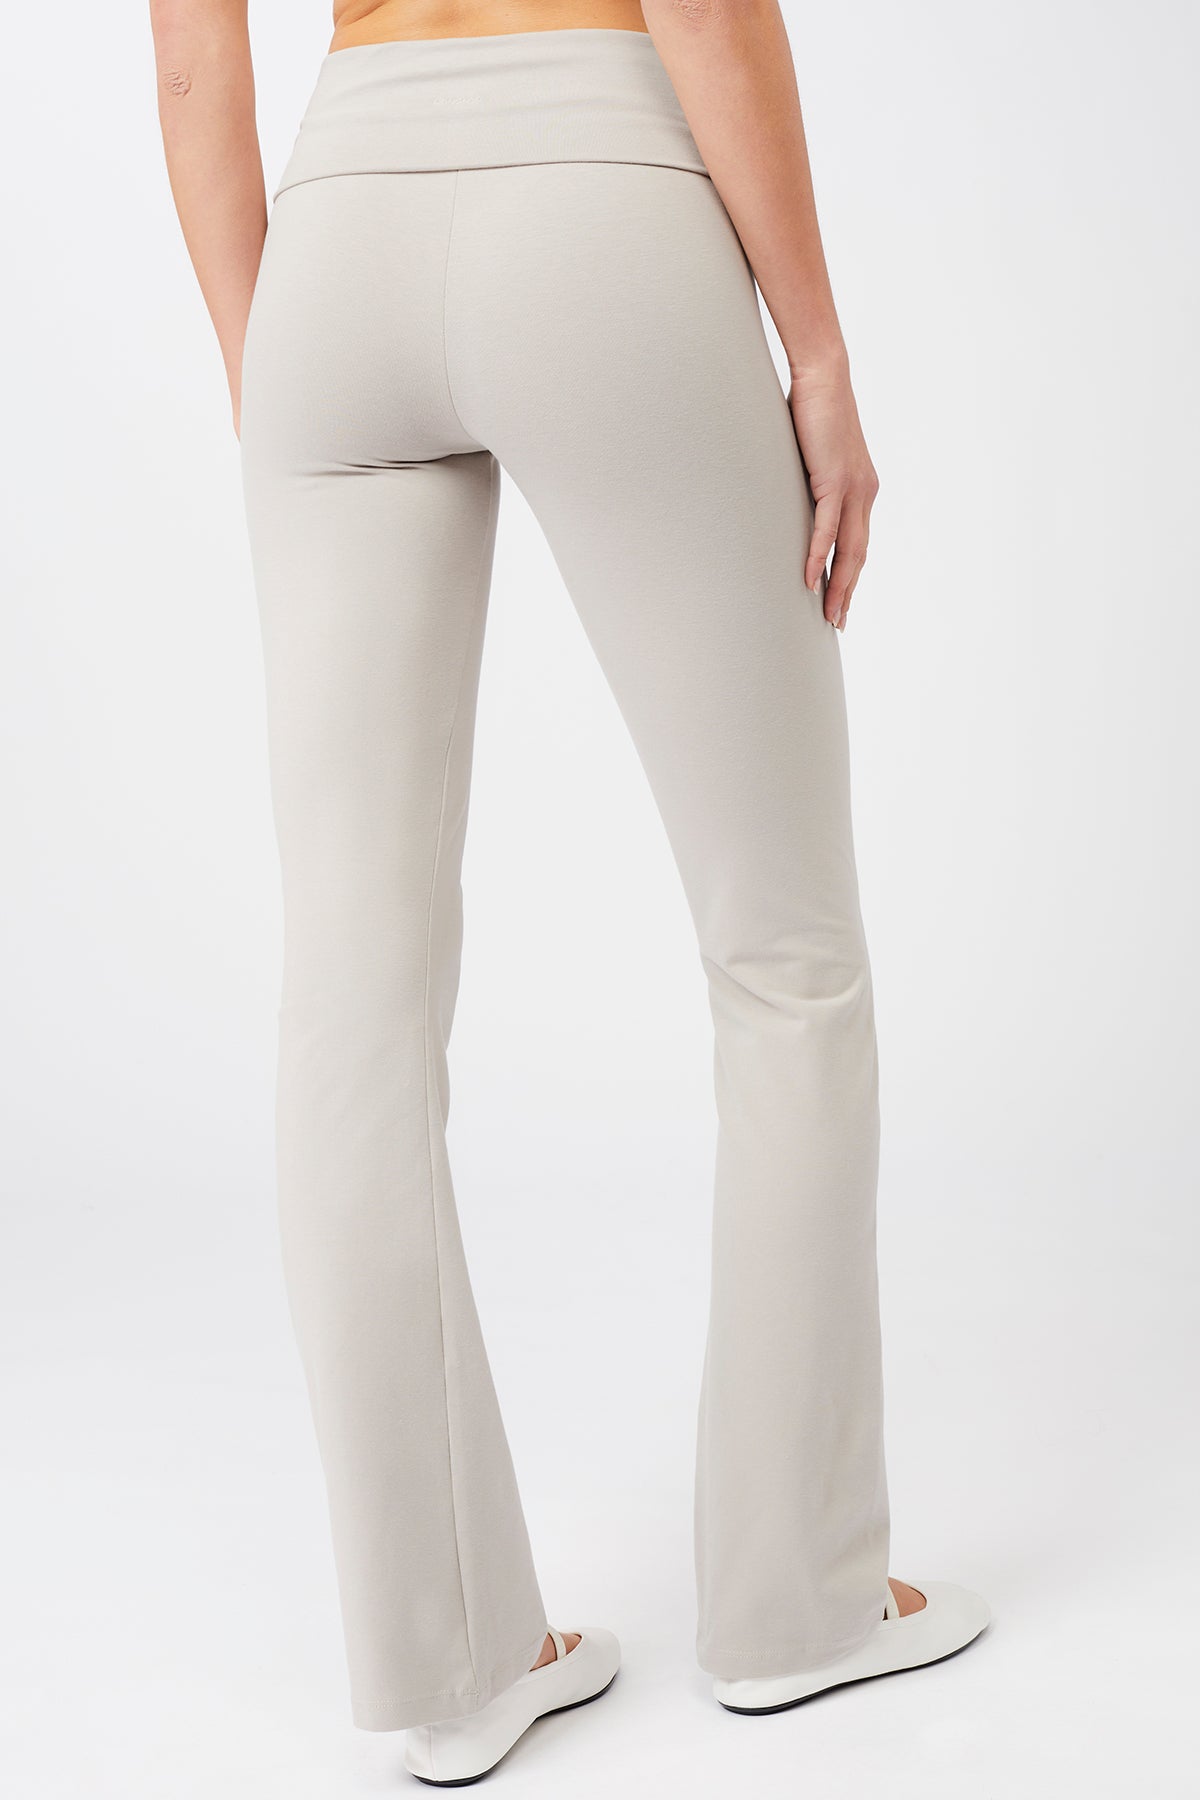 MANDALA Yoga Pants - sustainable & functional Yoga trousers